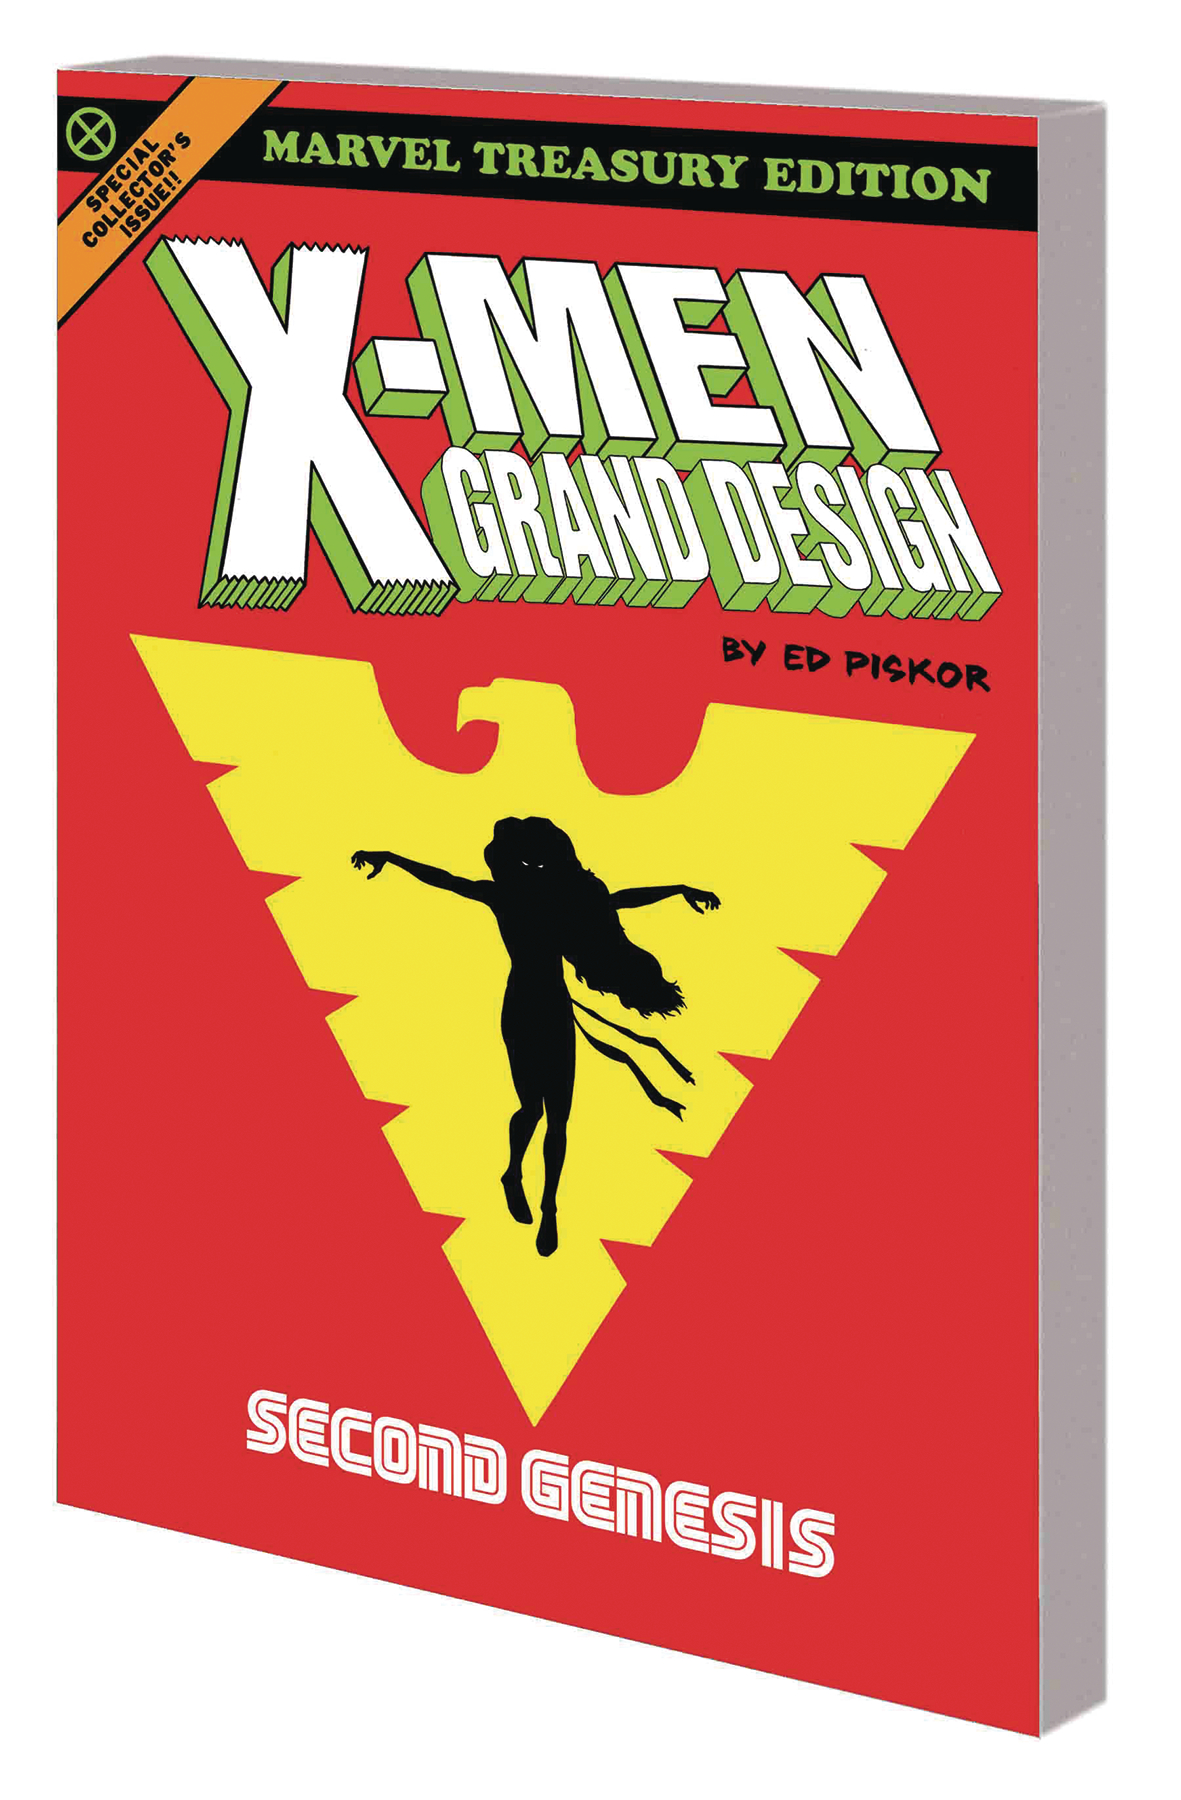 X-Men: Grand Design Second Genesis TP (2018)